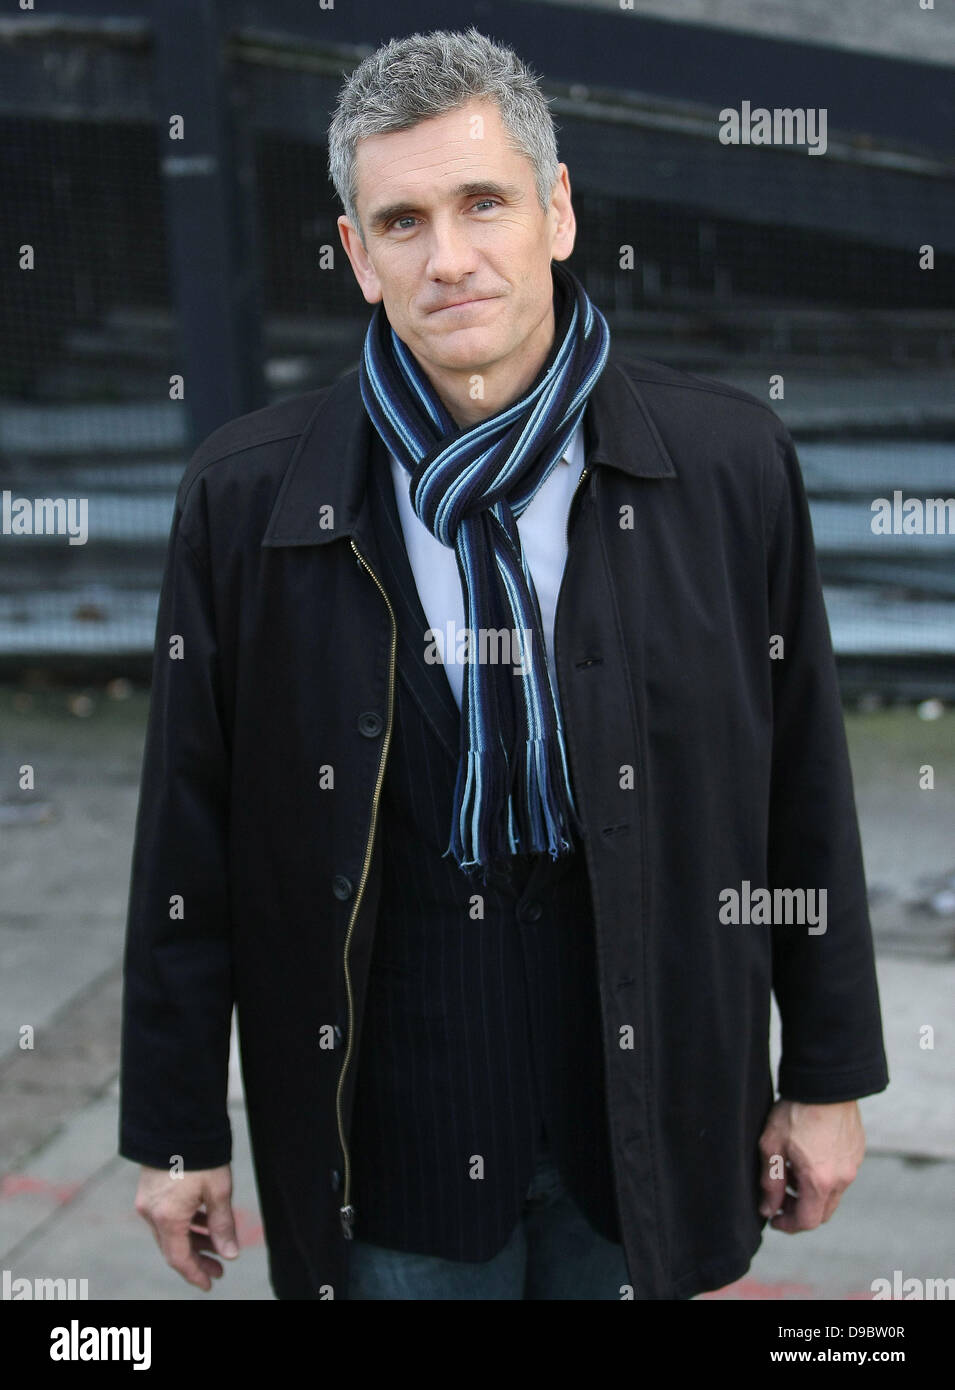 Curtis Stigers outside the ITV studios London, England - 26.01.12 Stock Photo